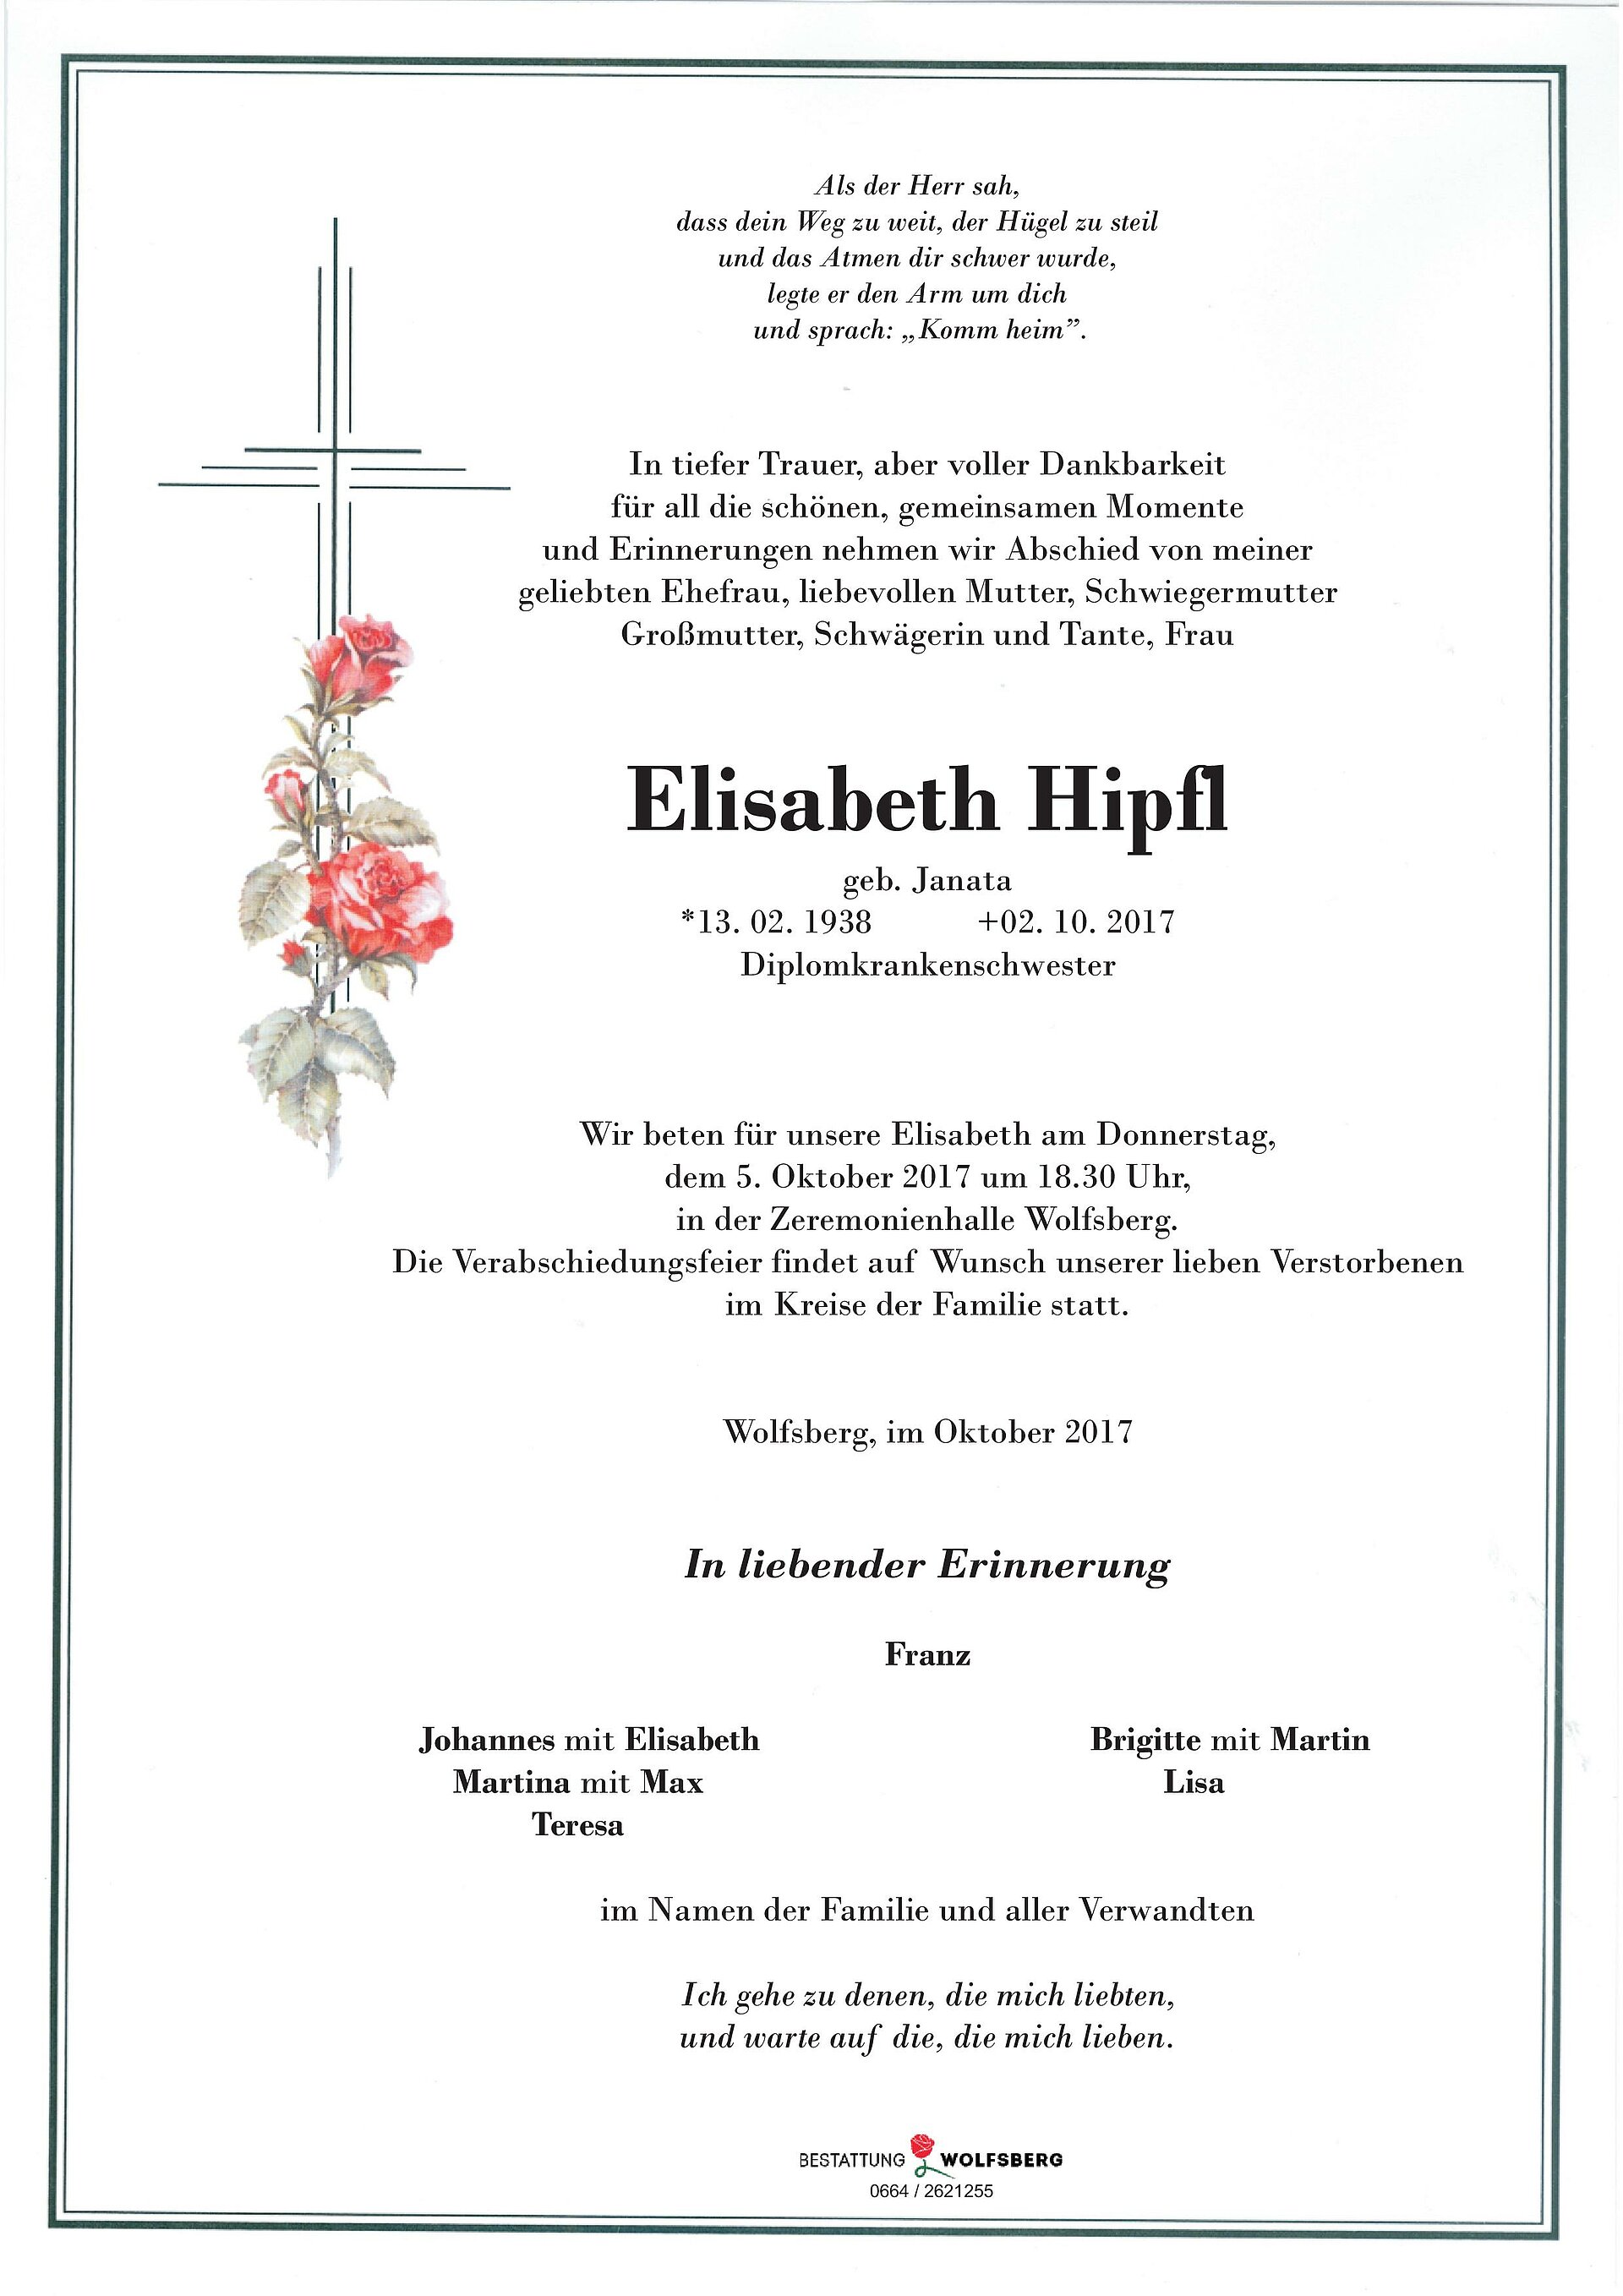 Hipfl-Elisabeth-parte-mit-rose-page-001.jpg